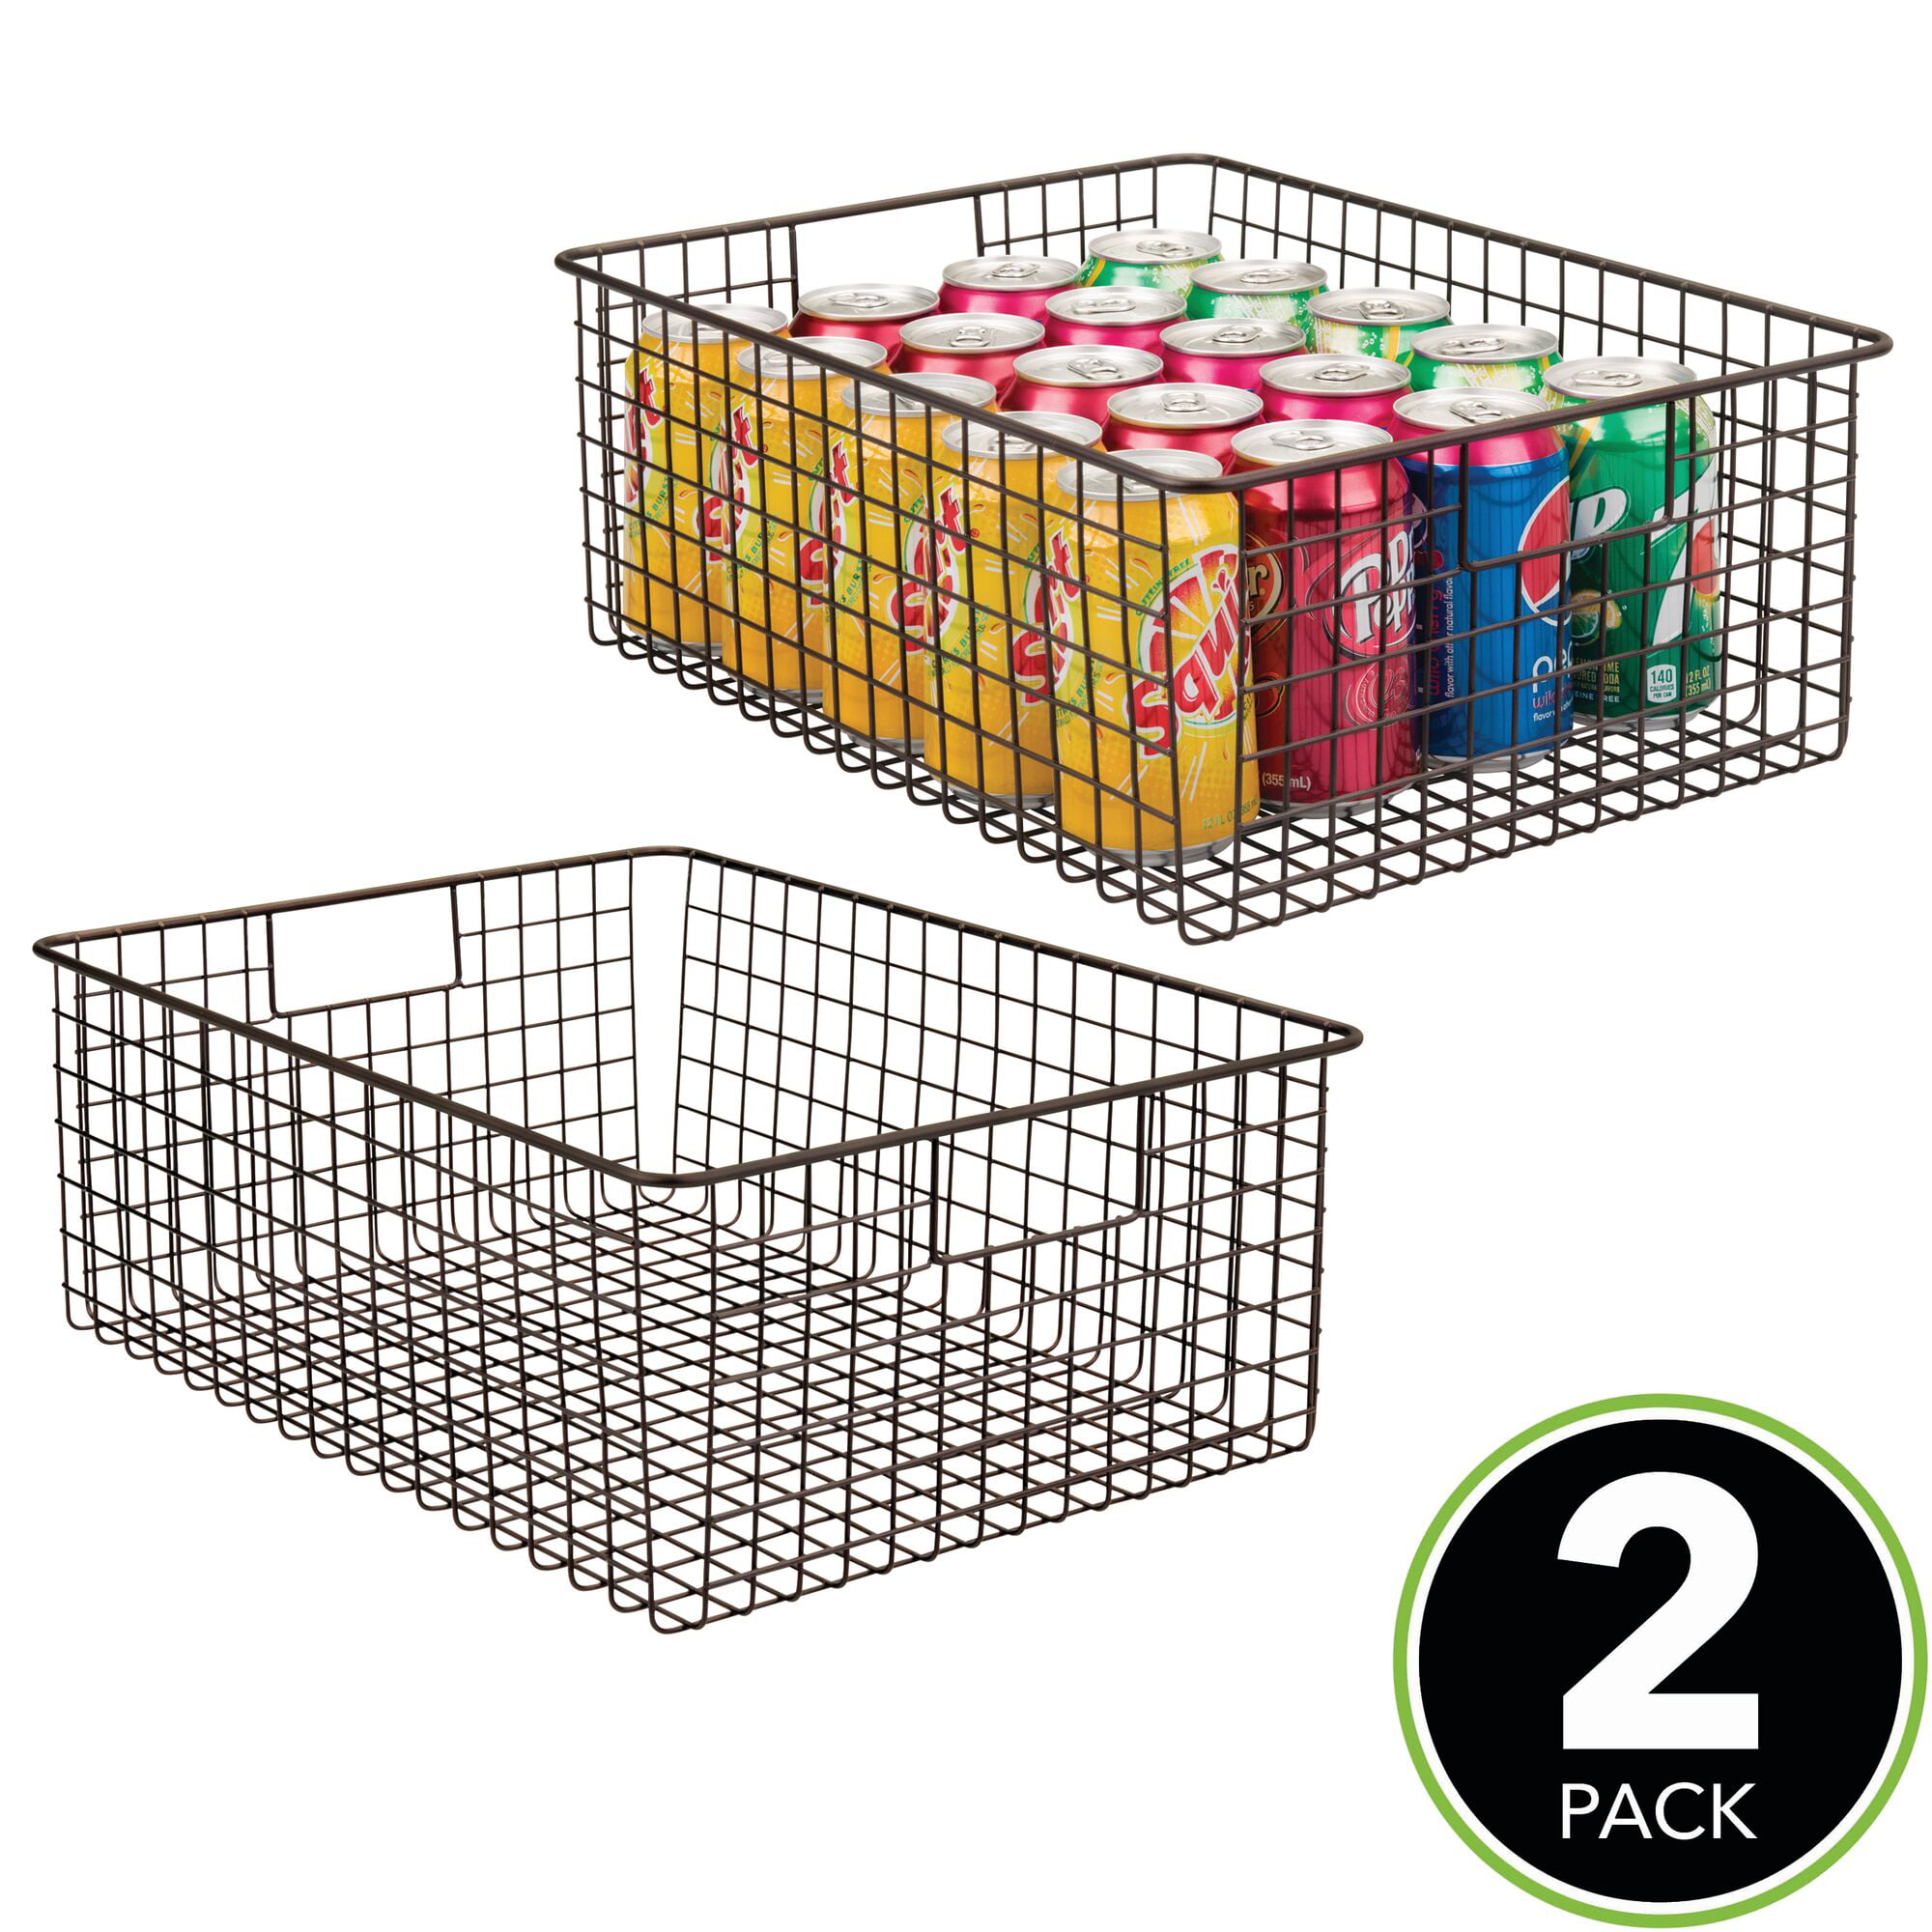 Bronze mDesign Metal Wire Food Organizer Storage Bins with Handles 2 Pack 